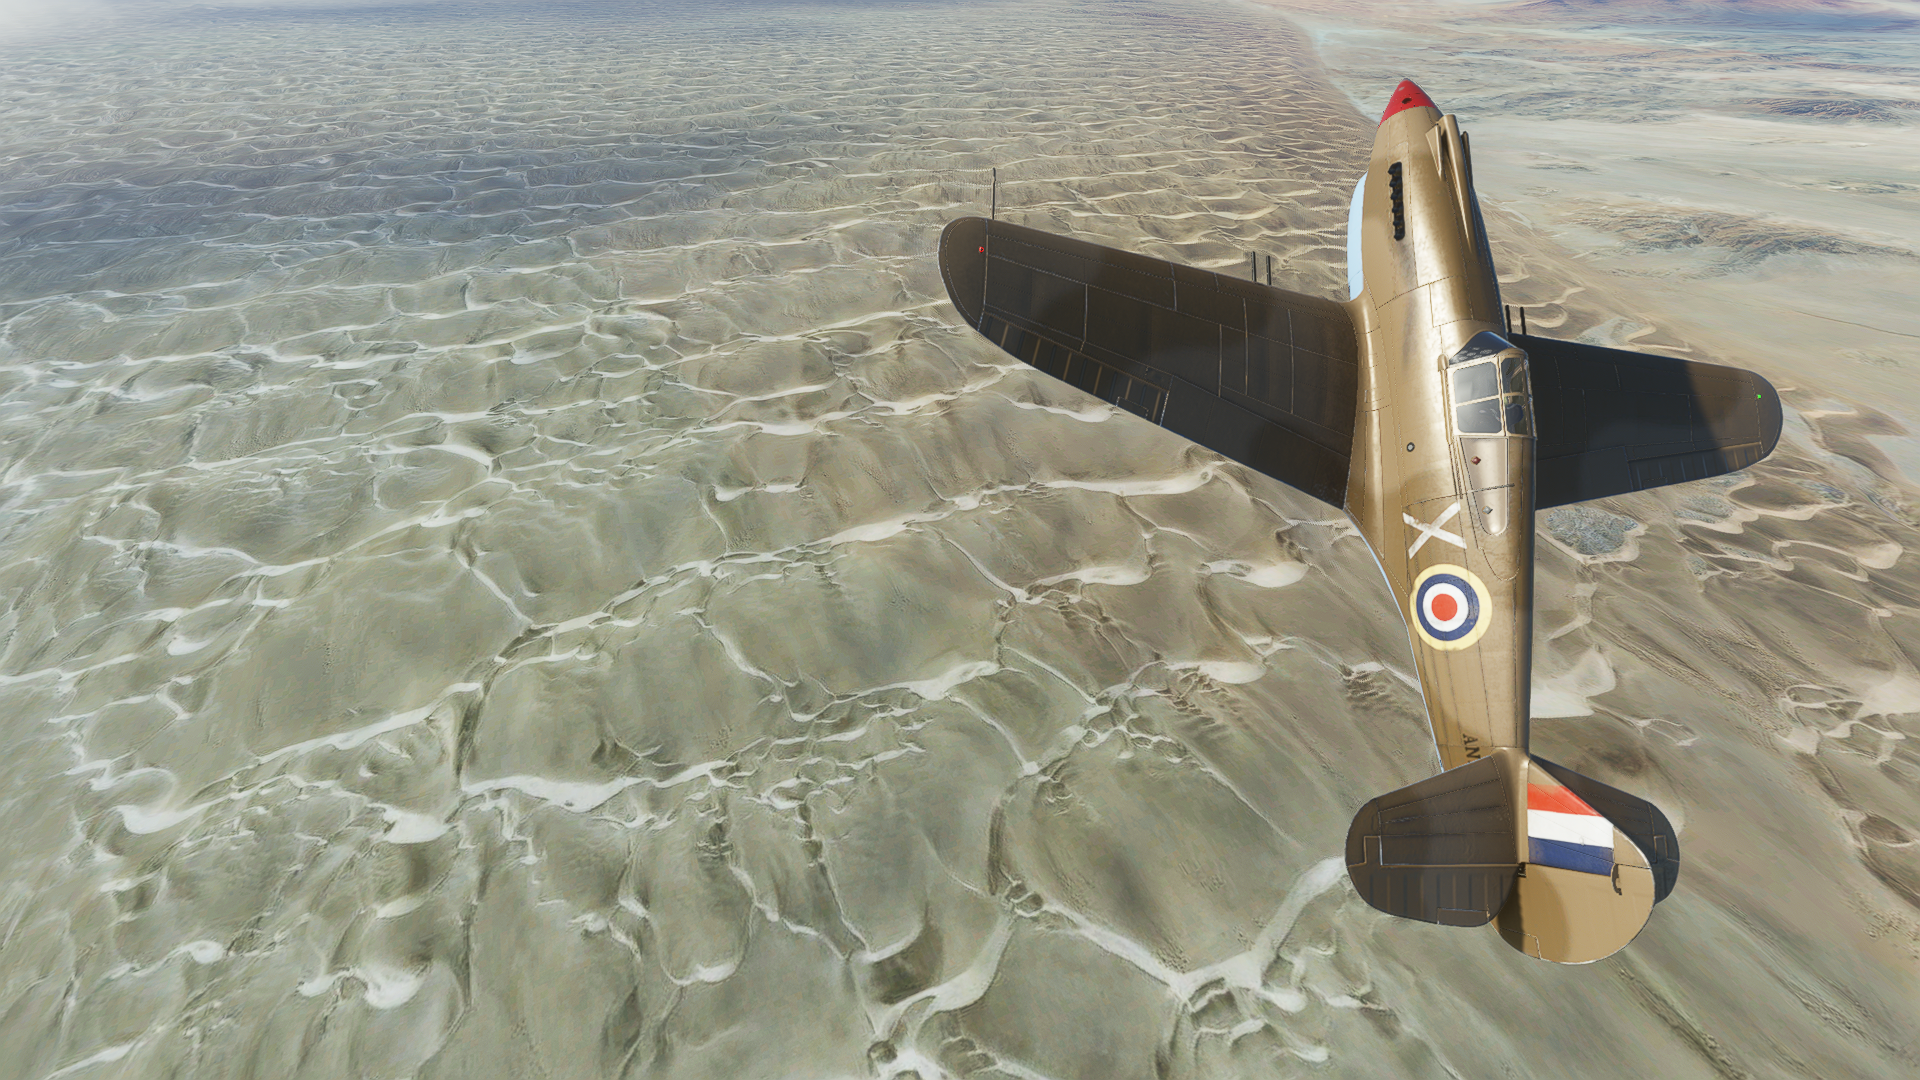 Big Radials P-40B Tomahawk